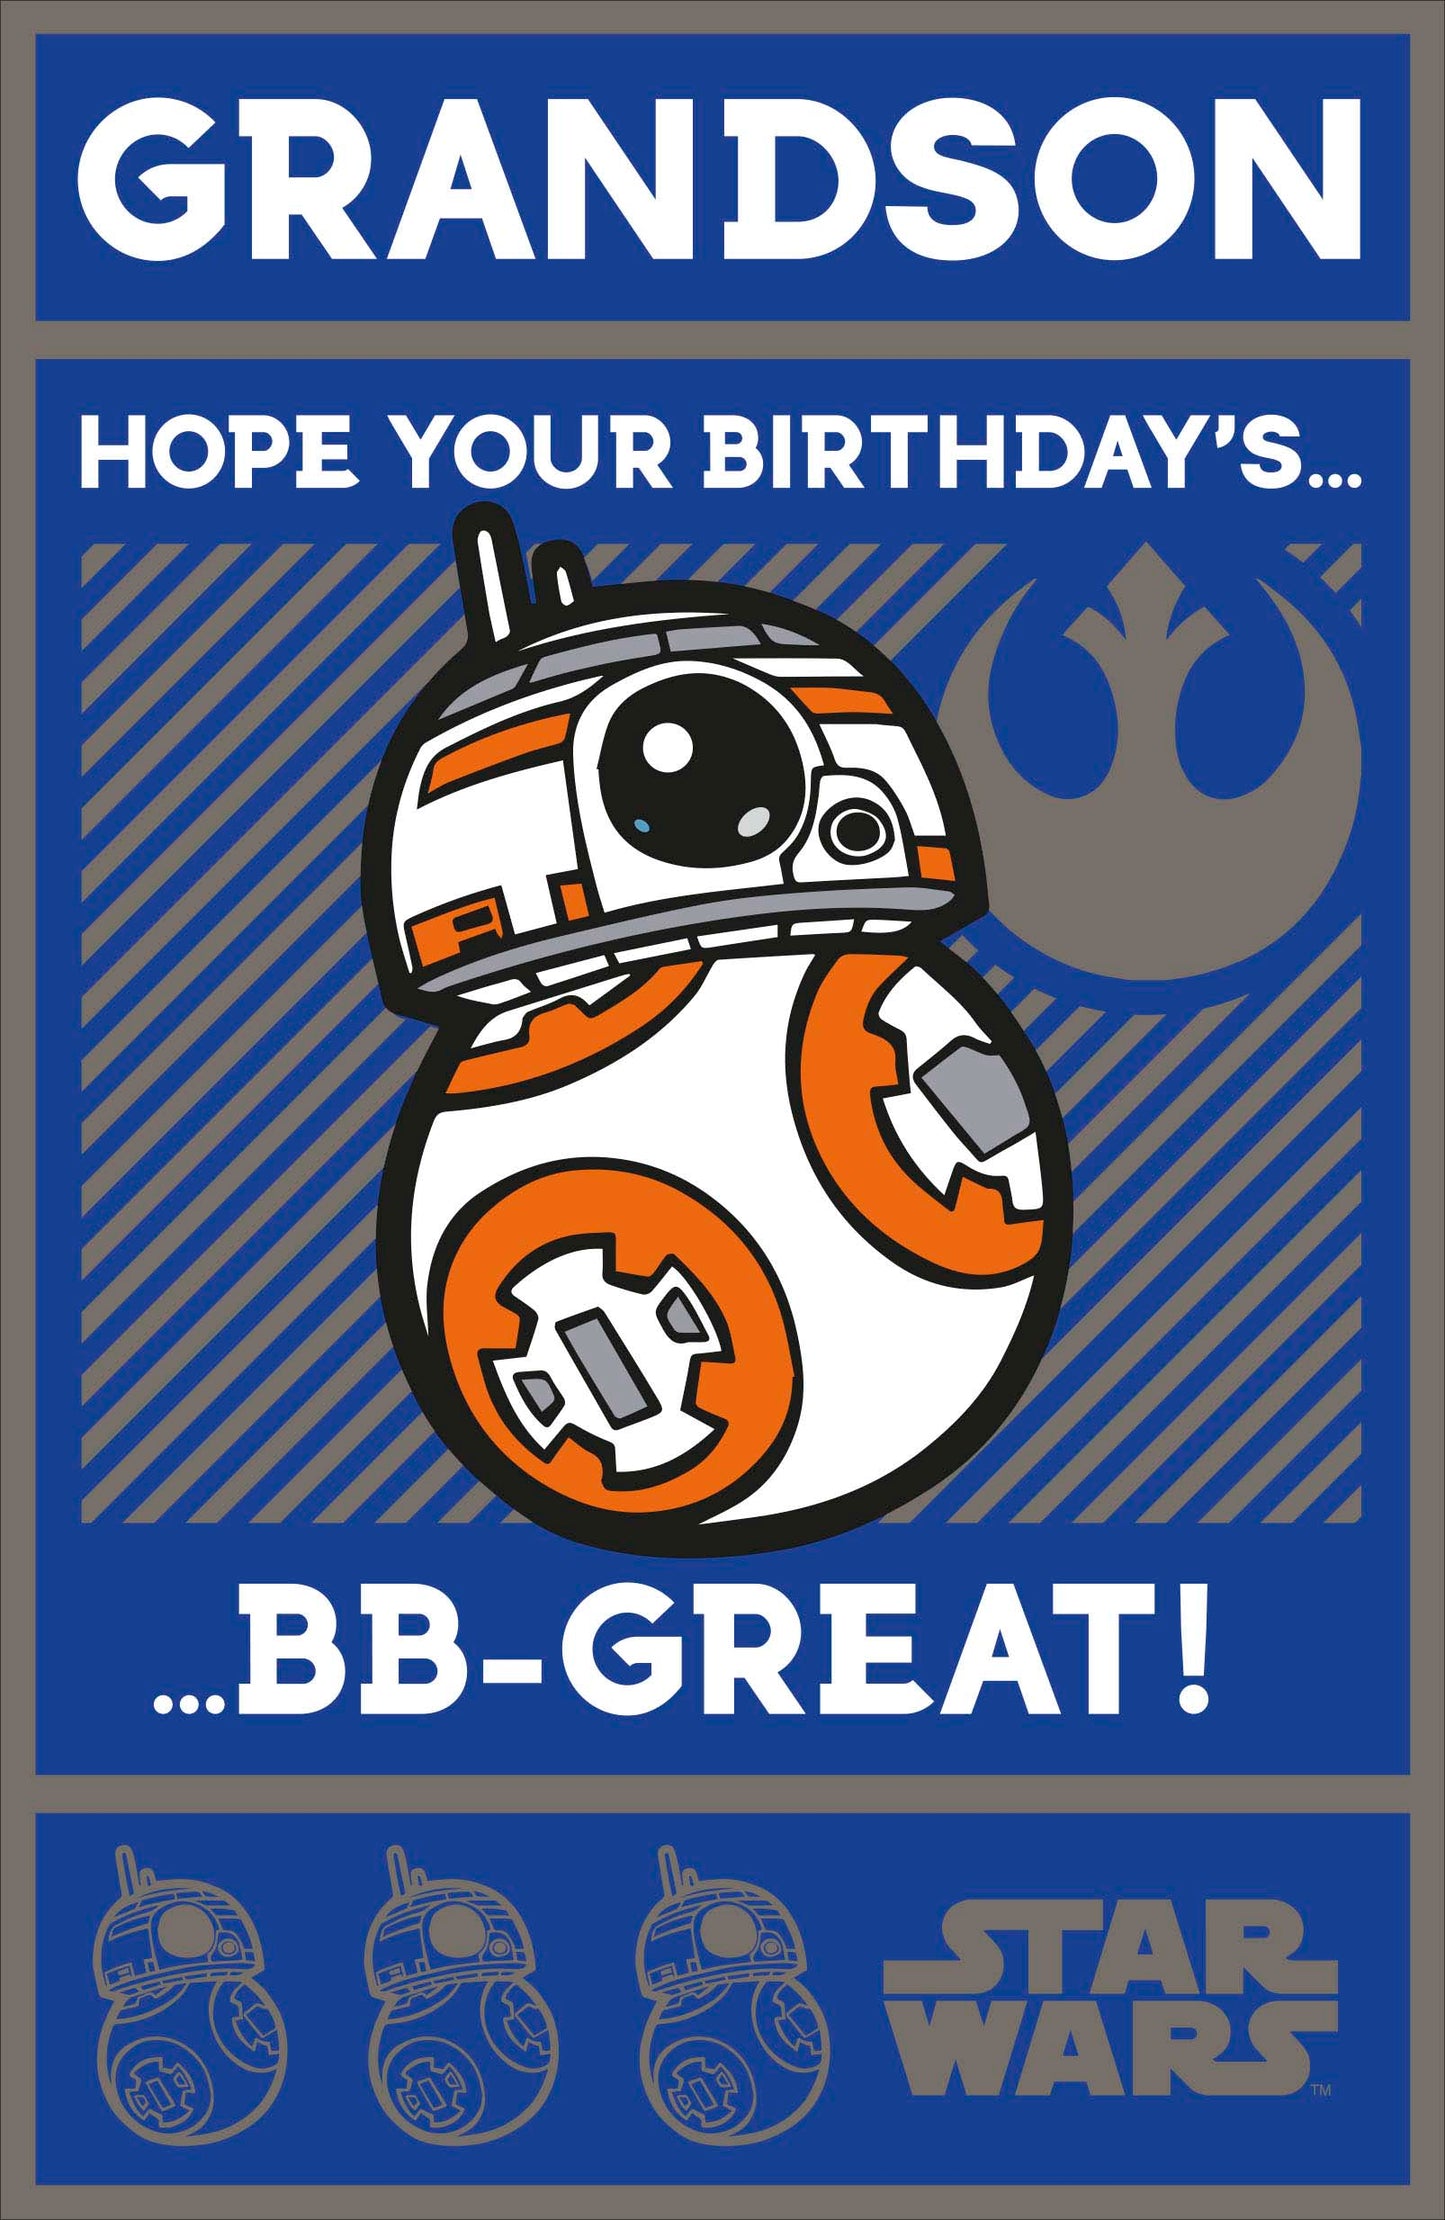 Star Wars BB-8 Droid Grandson Birthday Greeting Card